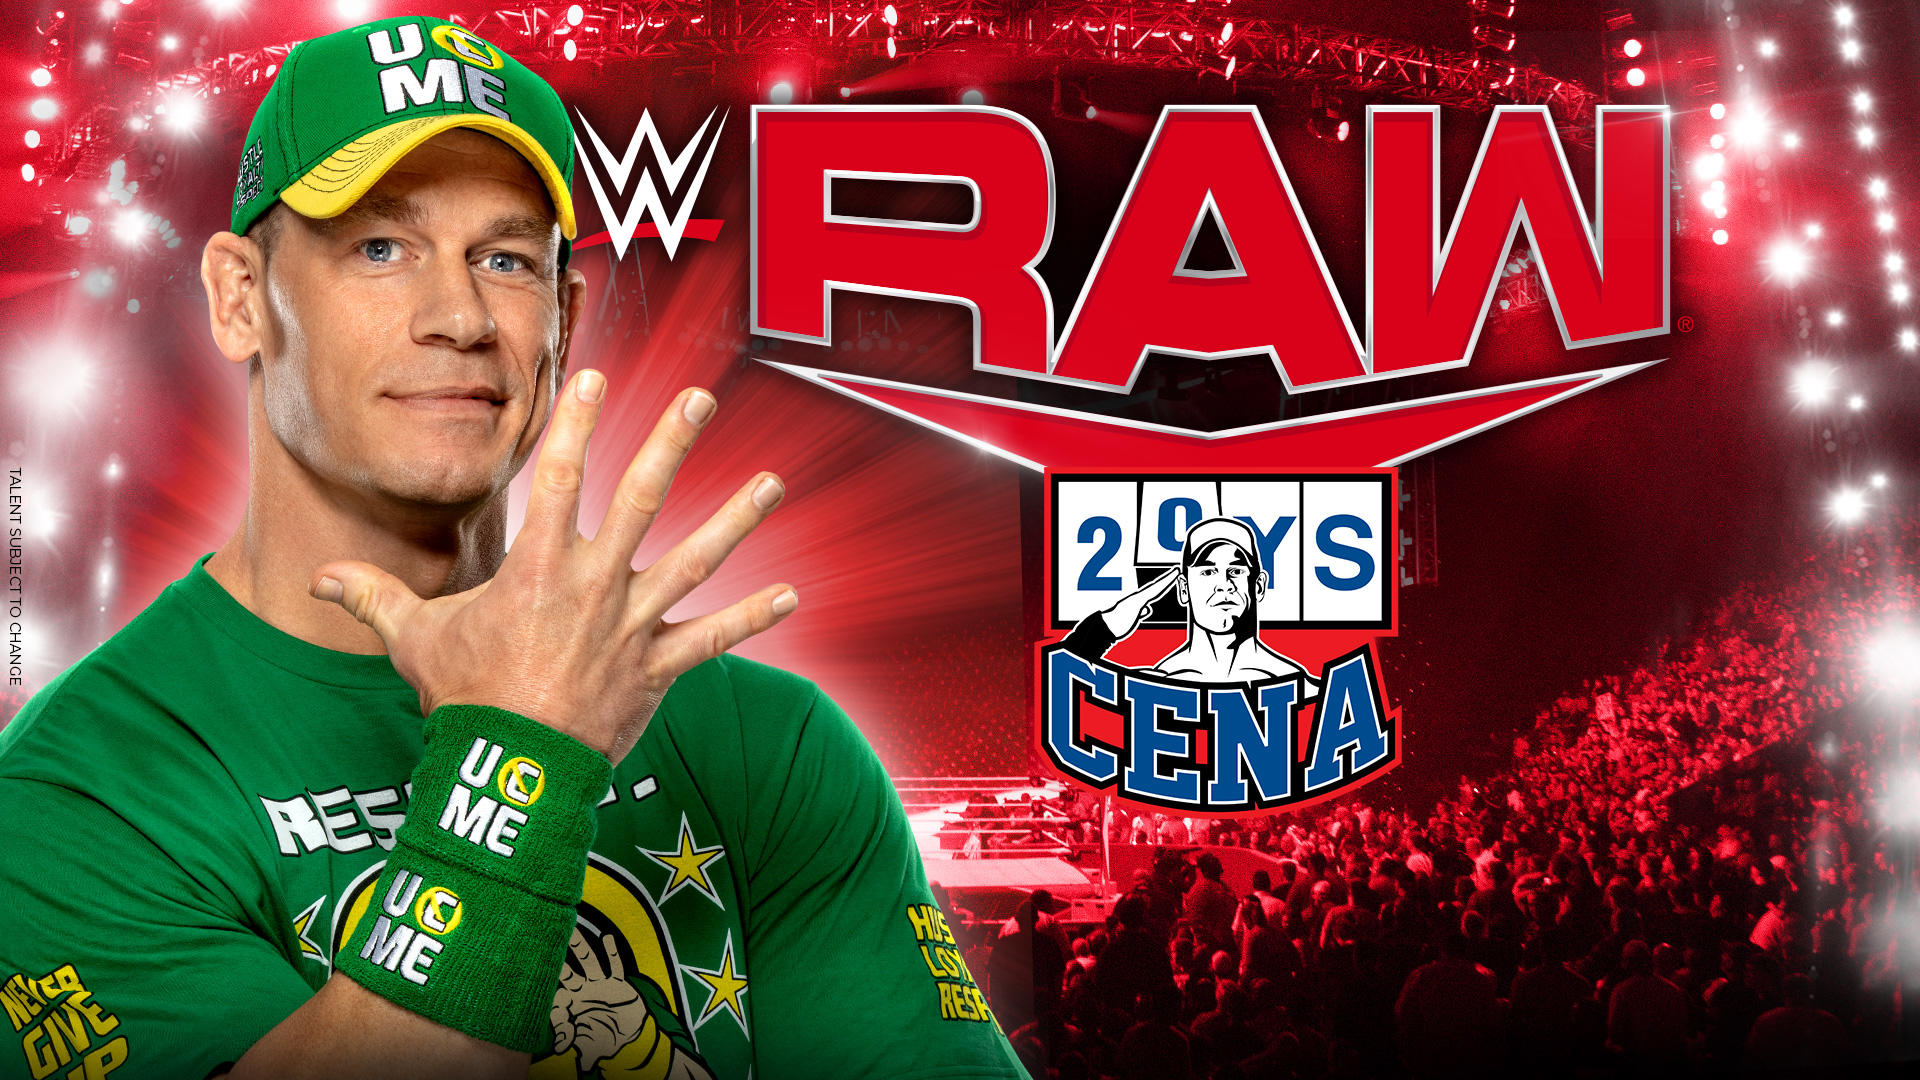 WWE RAW Preview for Tonight John Cena's 20th Anniversary Celebration